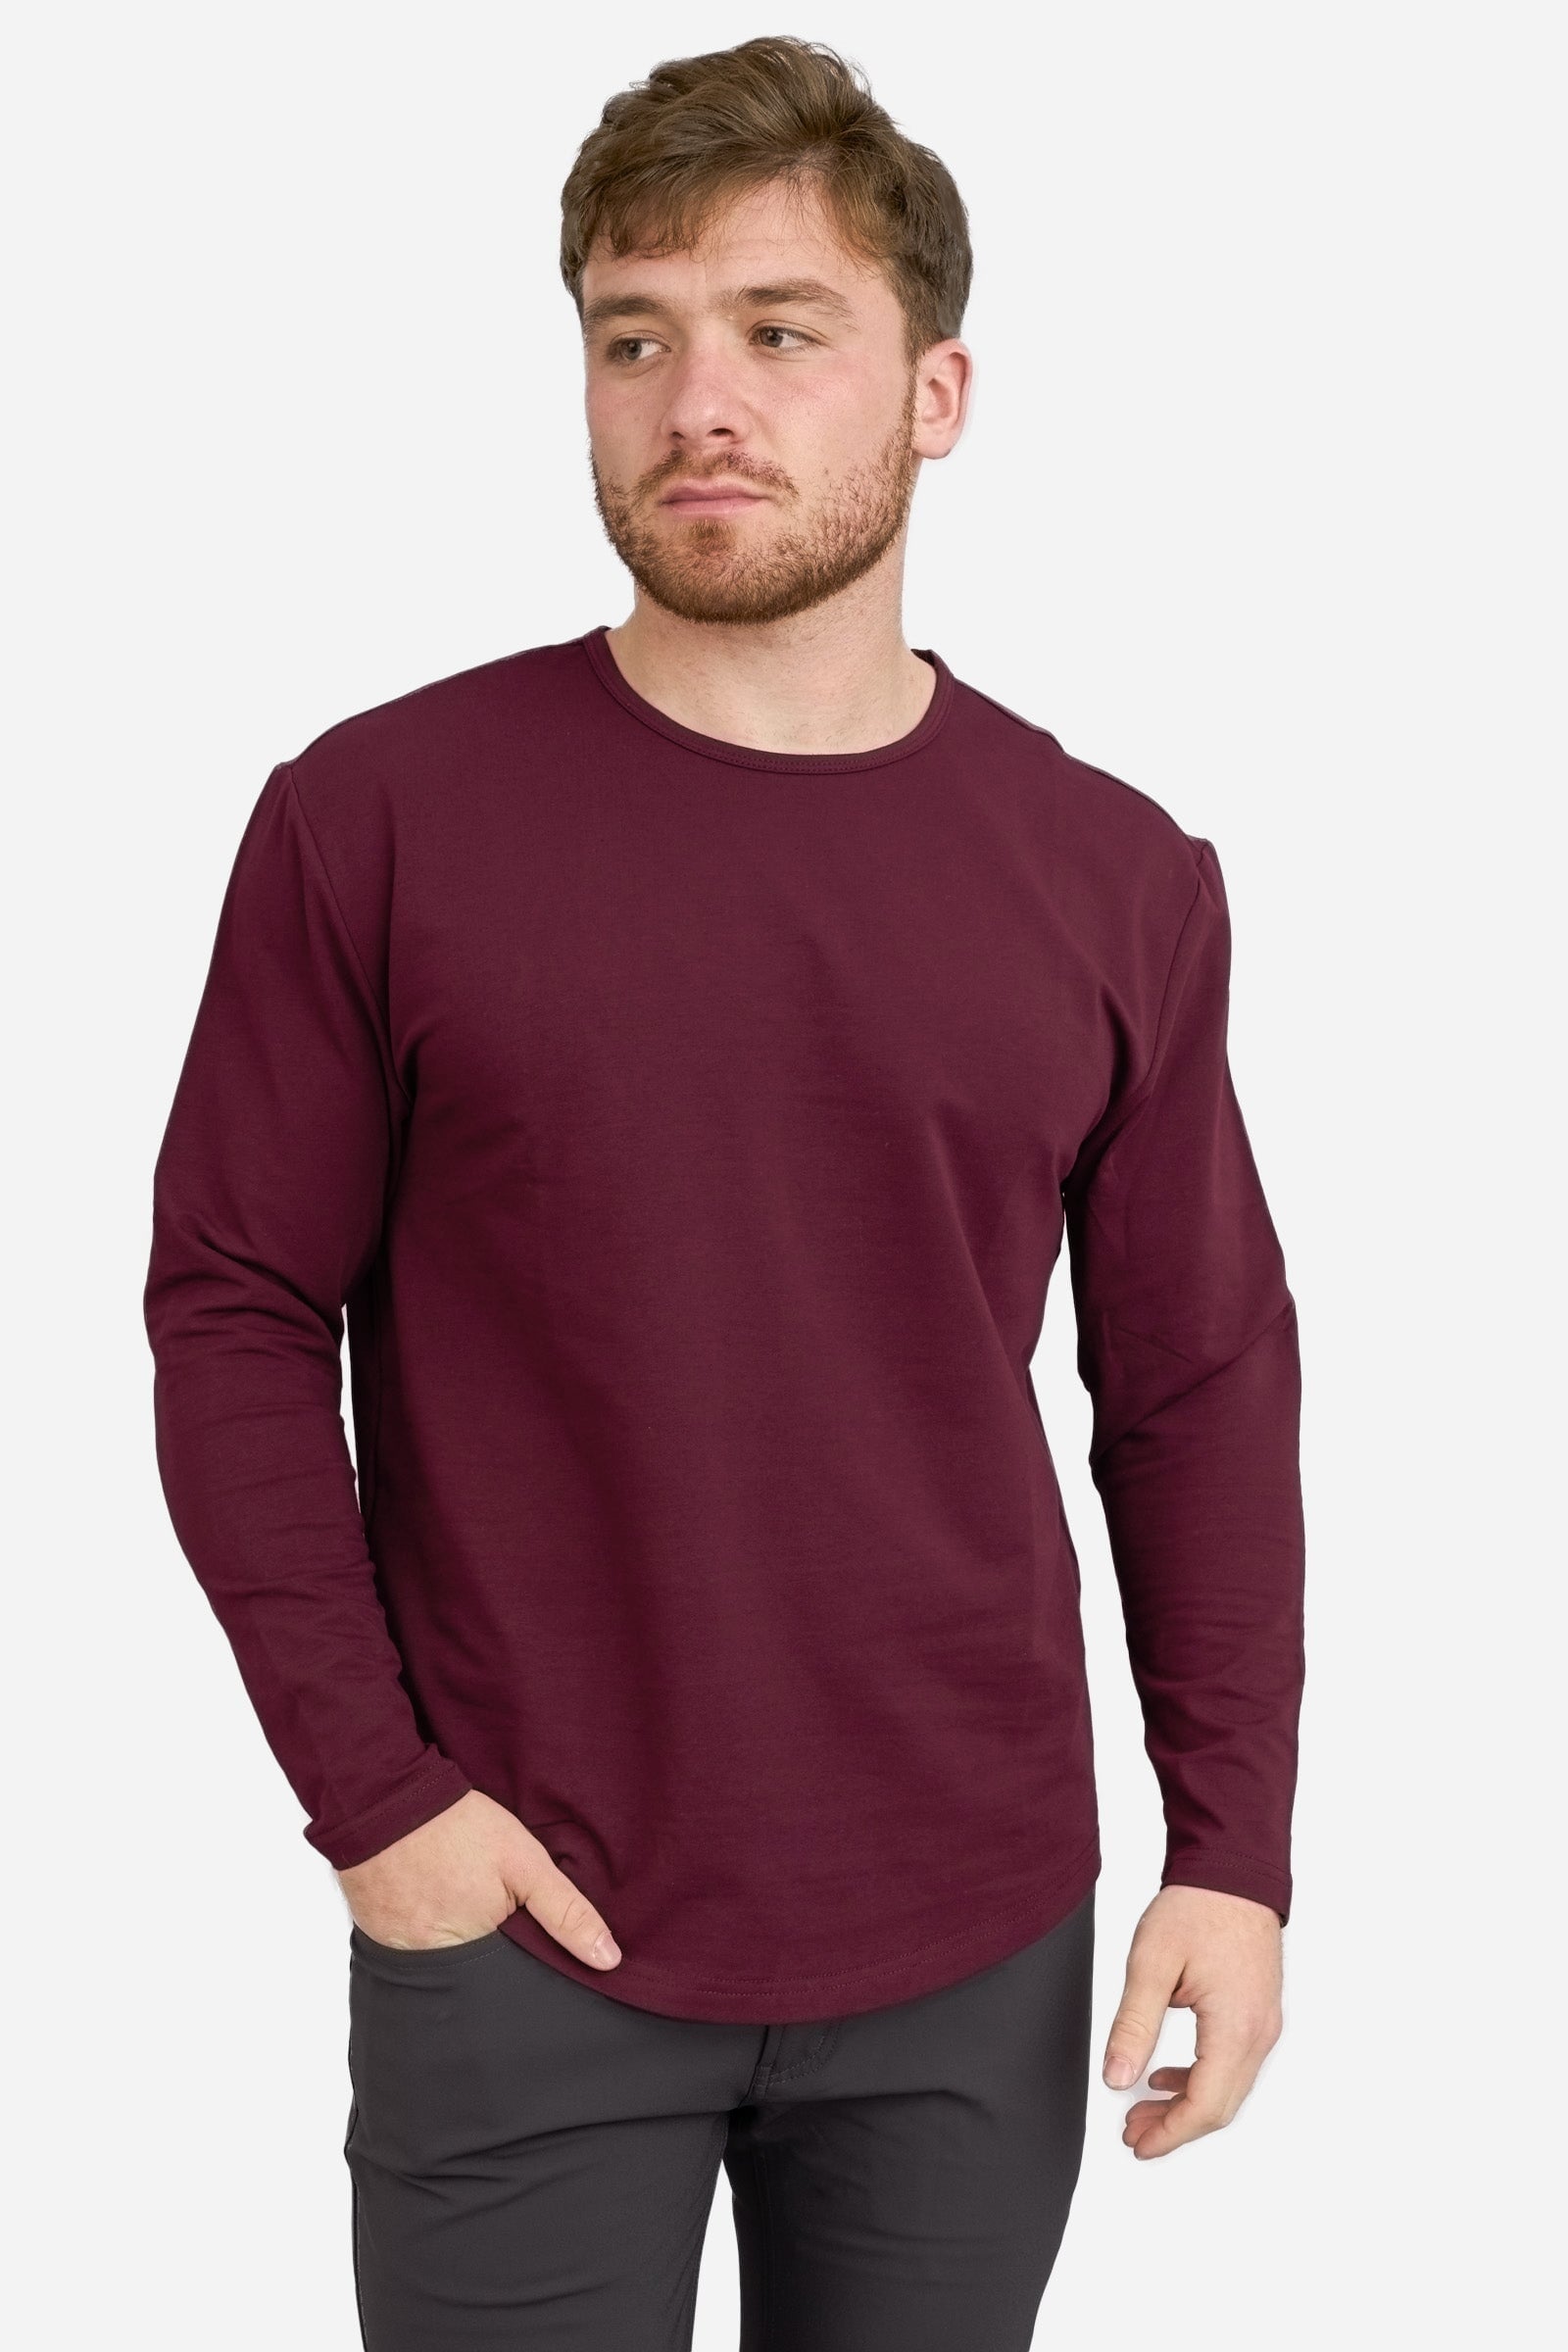 Long Sleeve Athletic Blend T-Shirt Burgundy